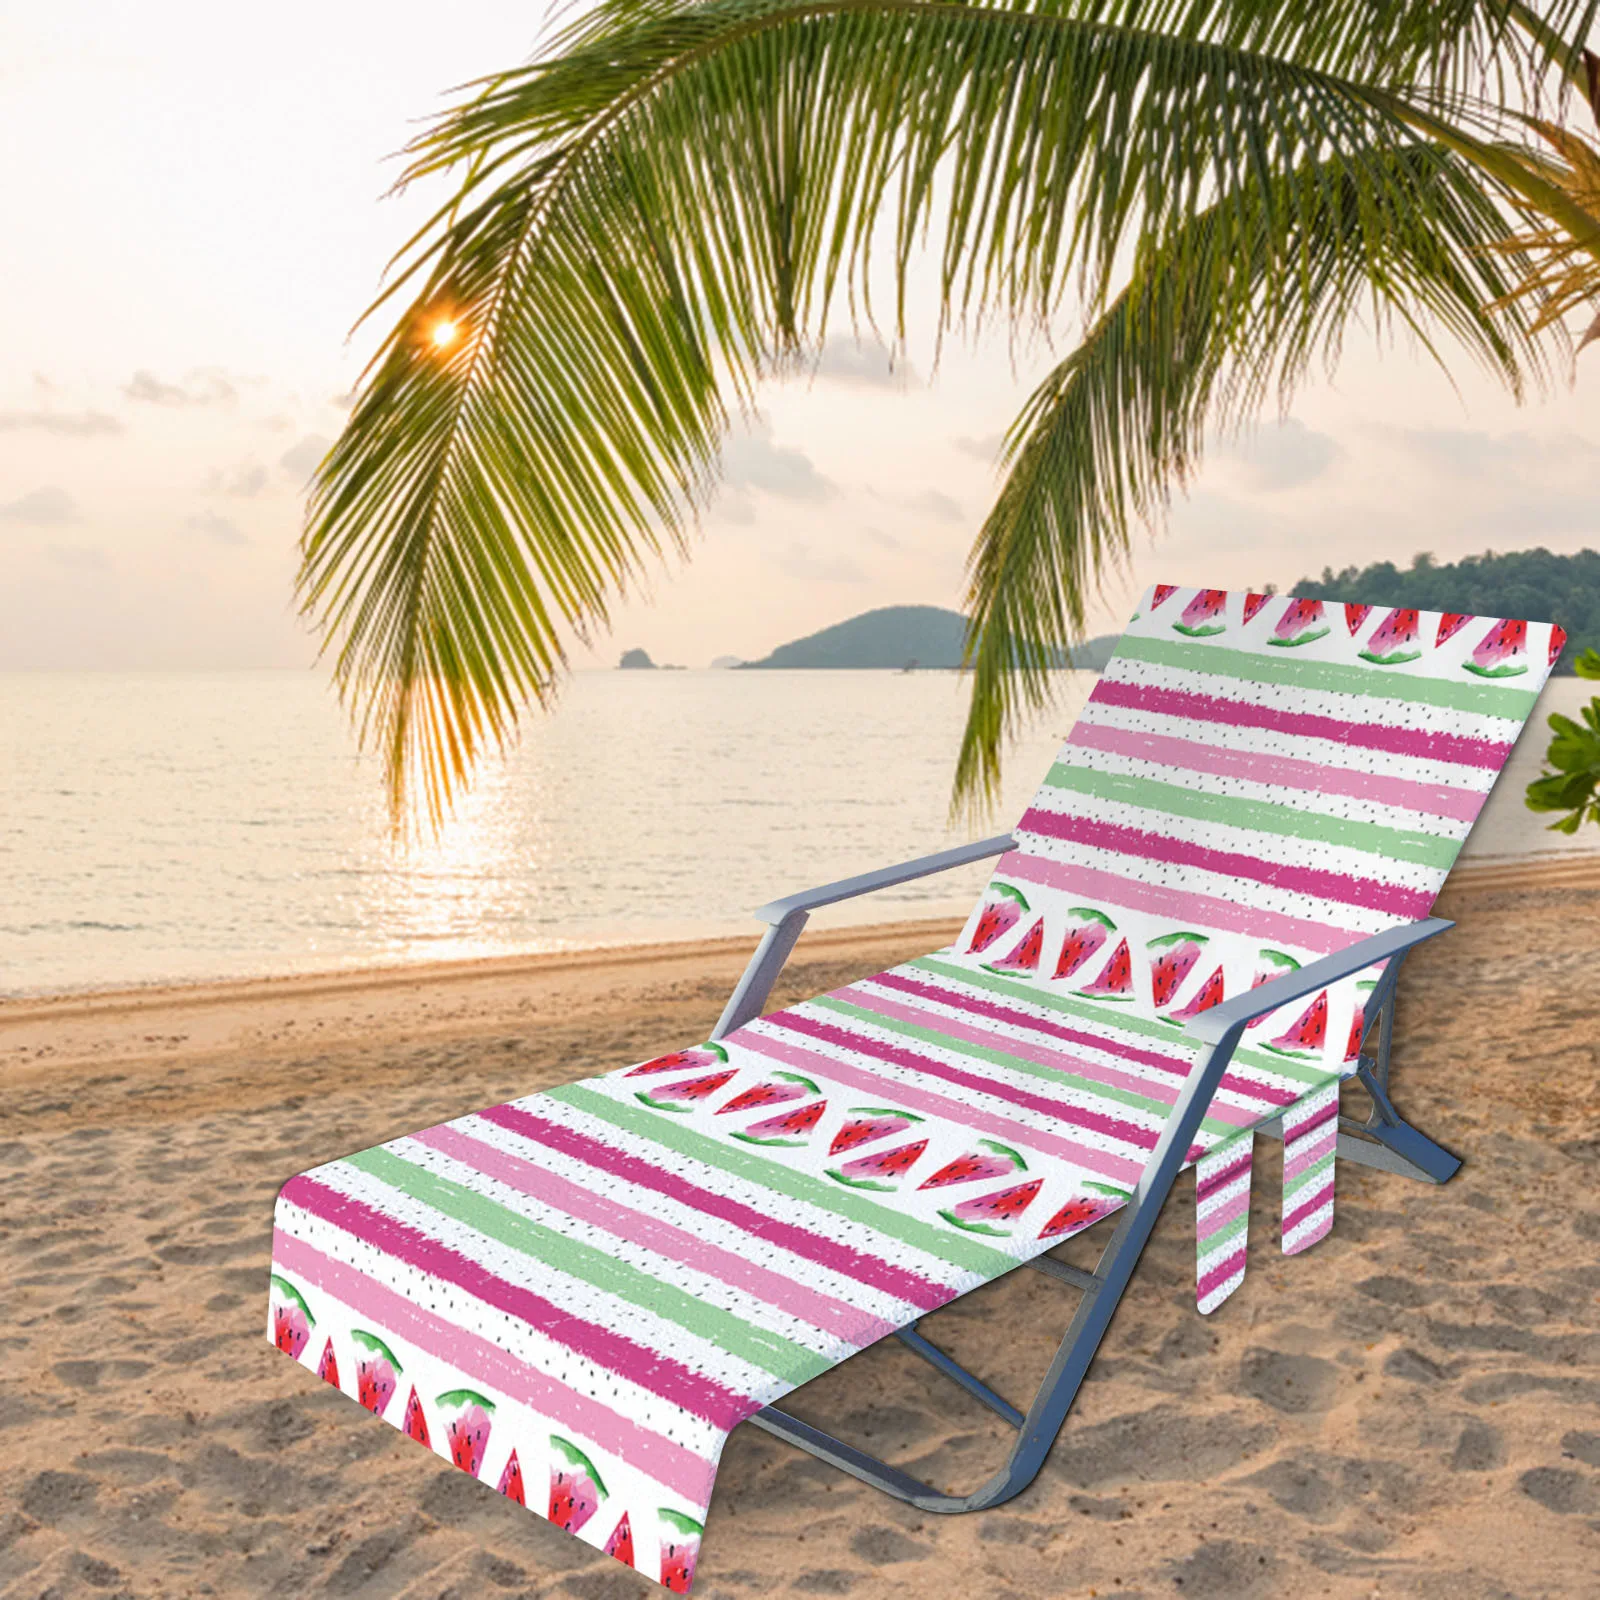 klinkamz Microfiber Sunbath Lounger Chair Cover Beach Towel Quick Drying with Pockets for Holidays Sunbathing 